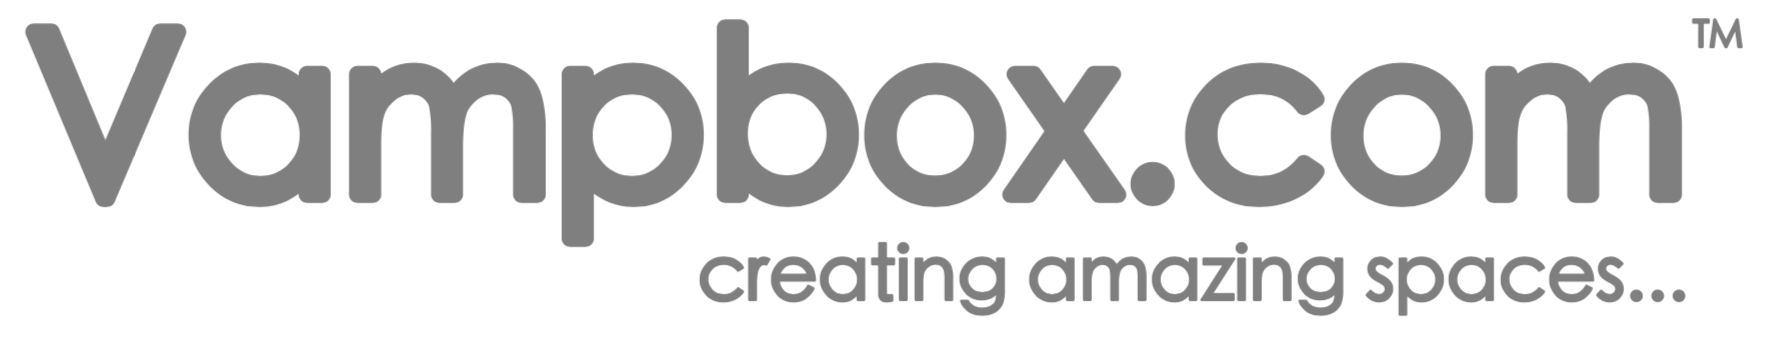 Vampbox.com Logo